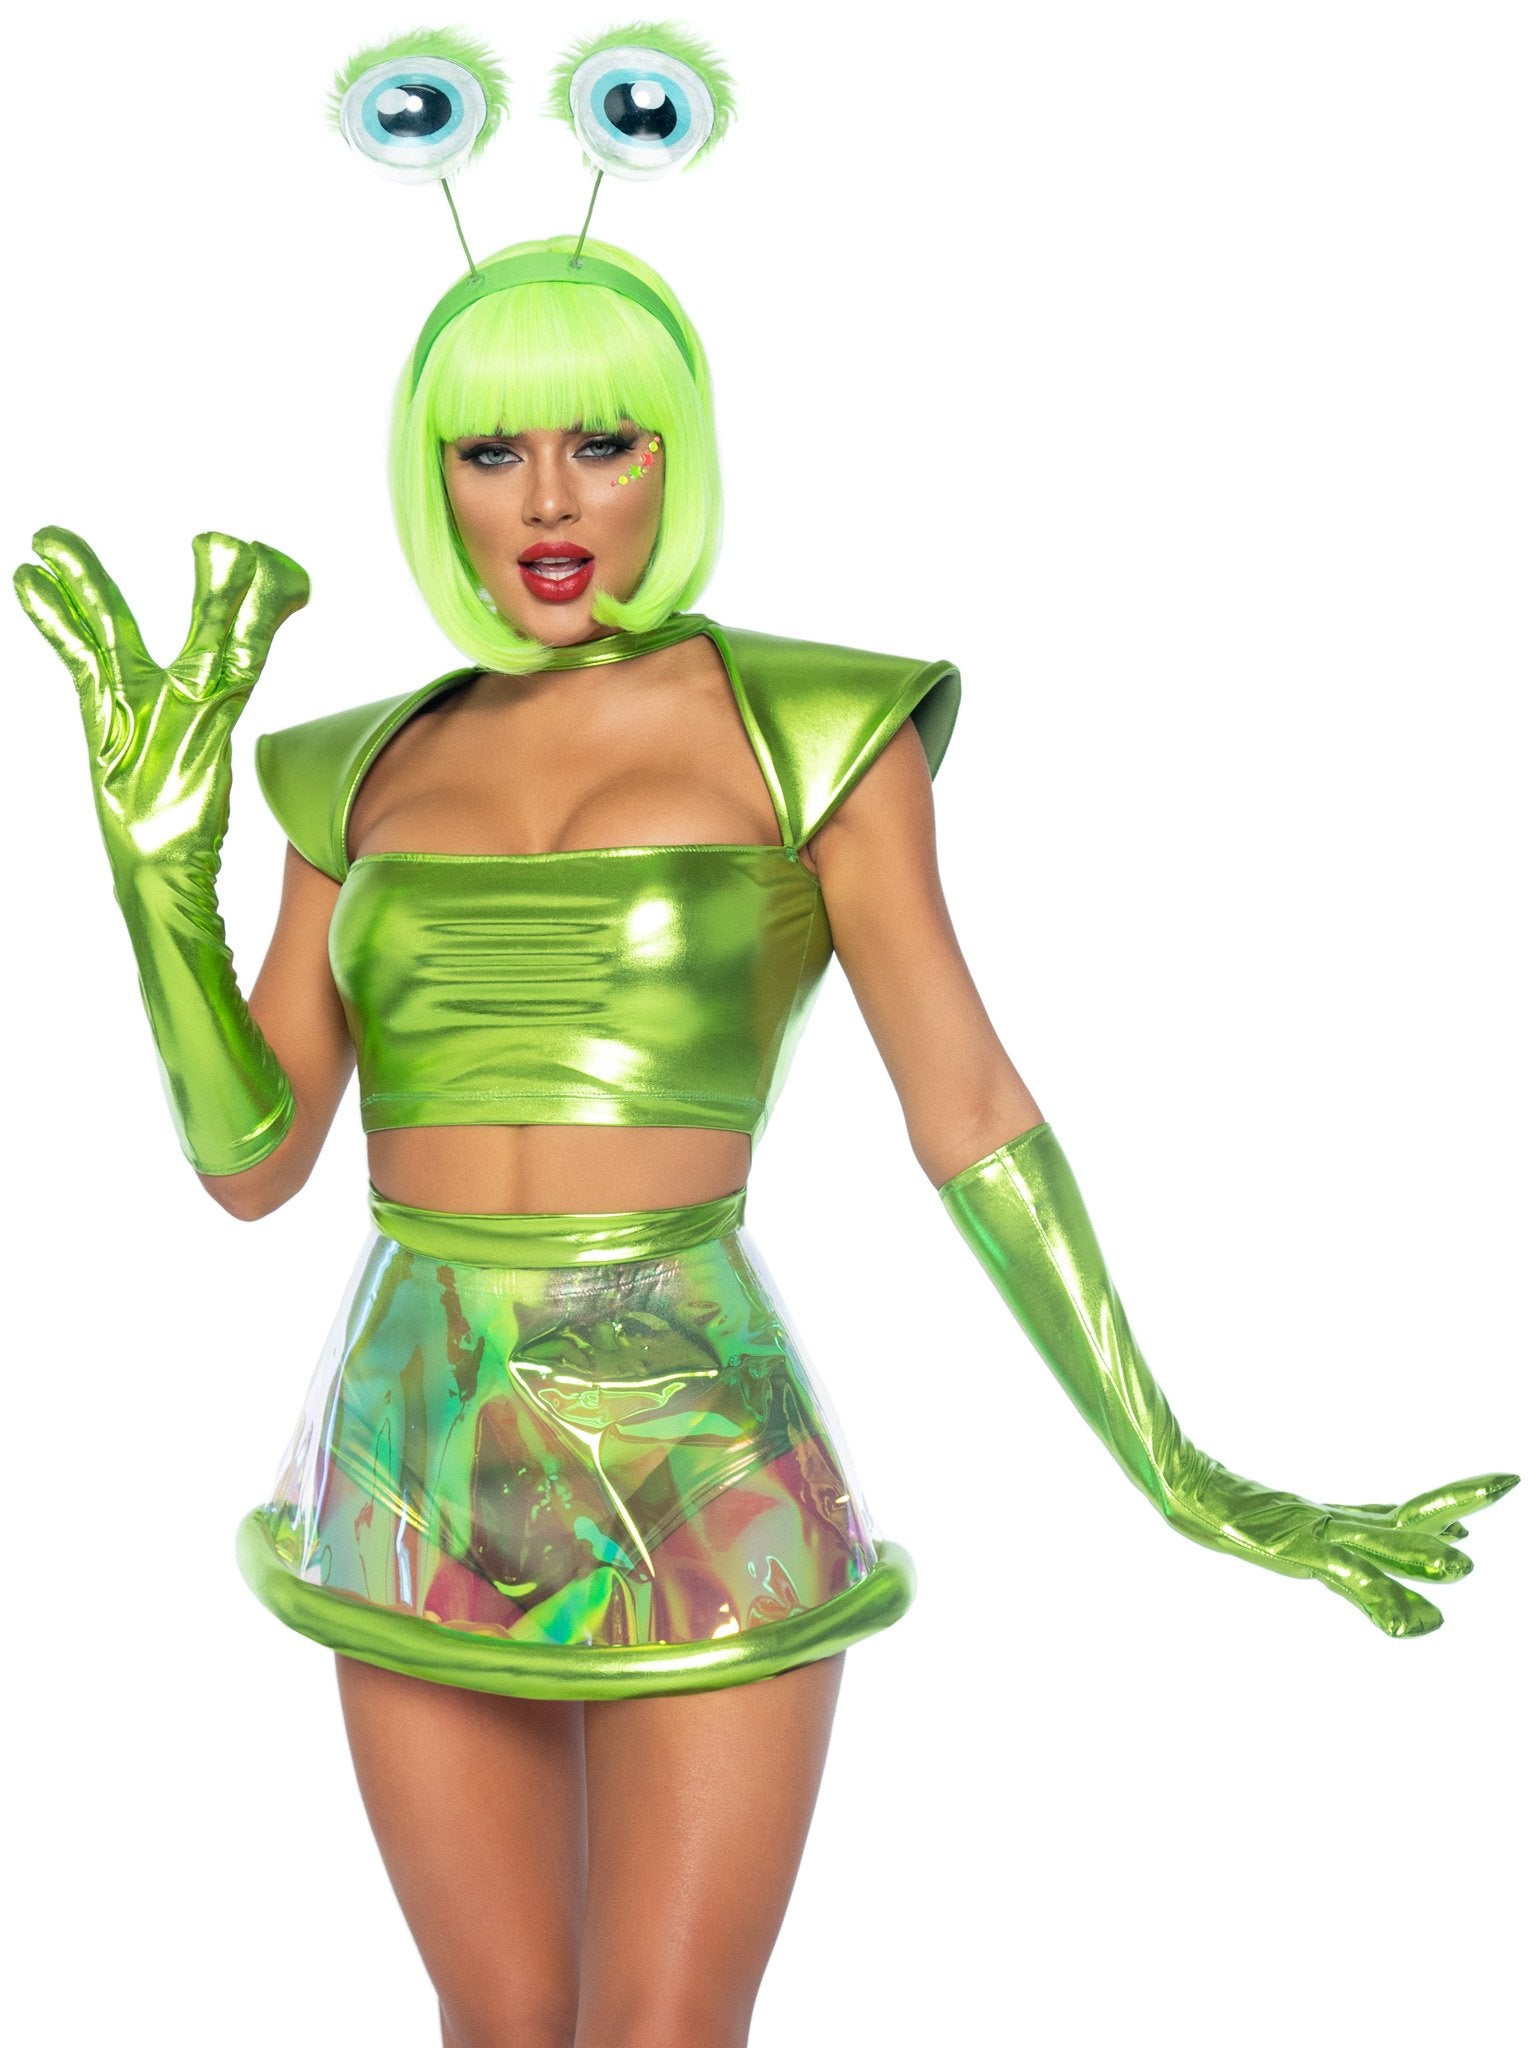 The HOTTEST Alien Costumes, 8 Holographic Alien Costume Ideas